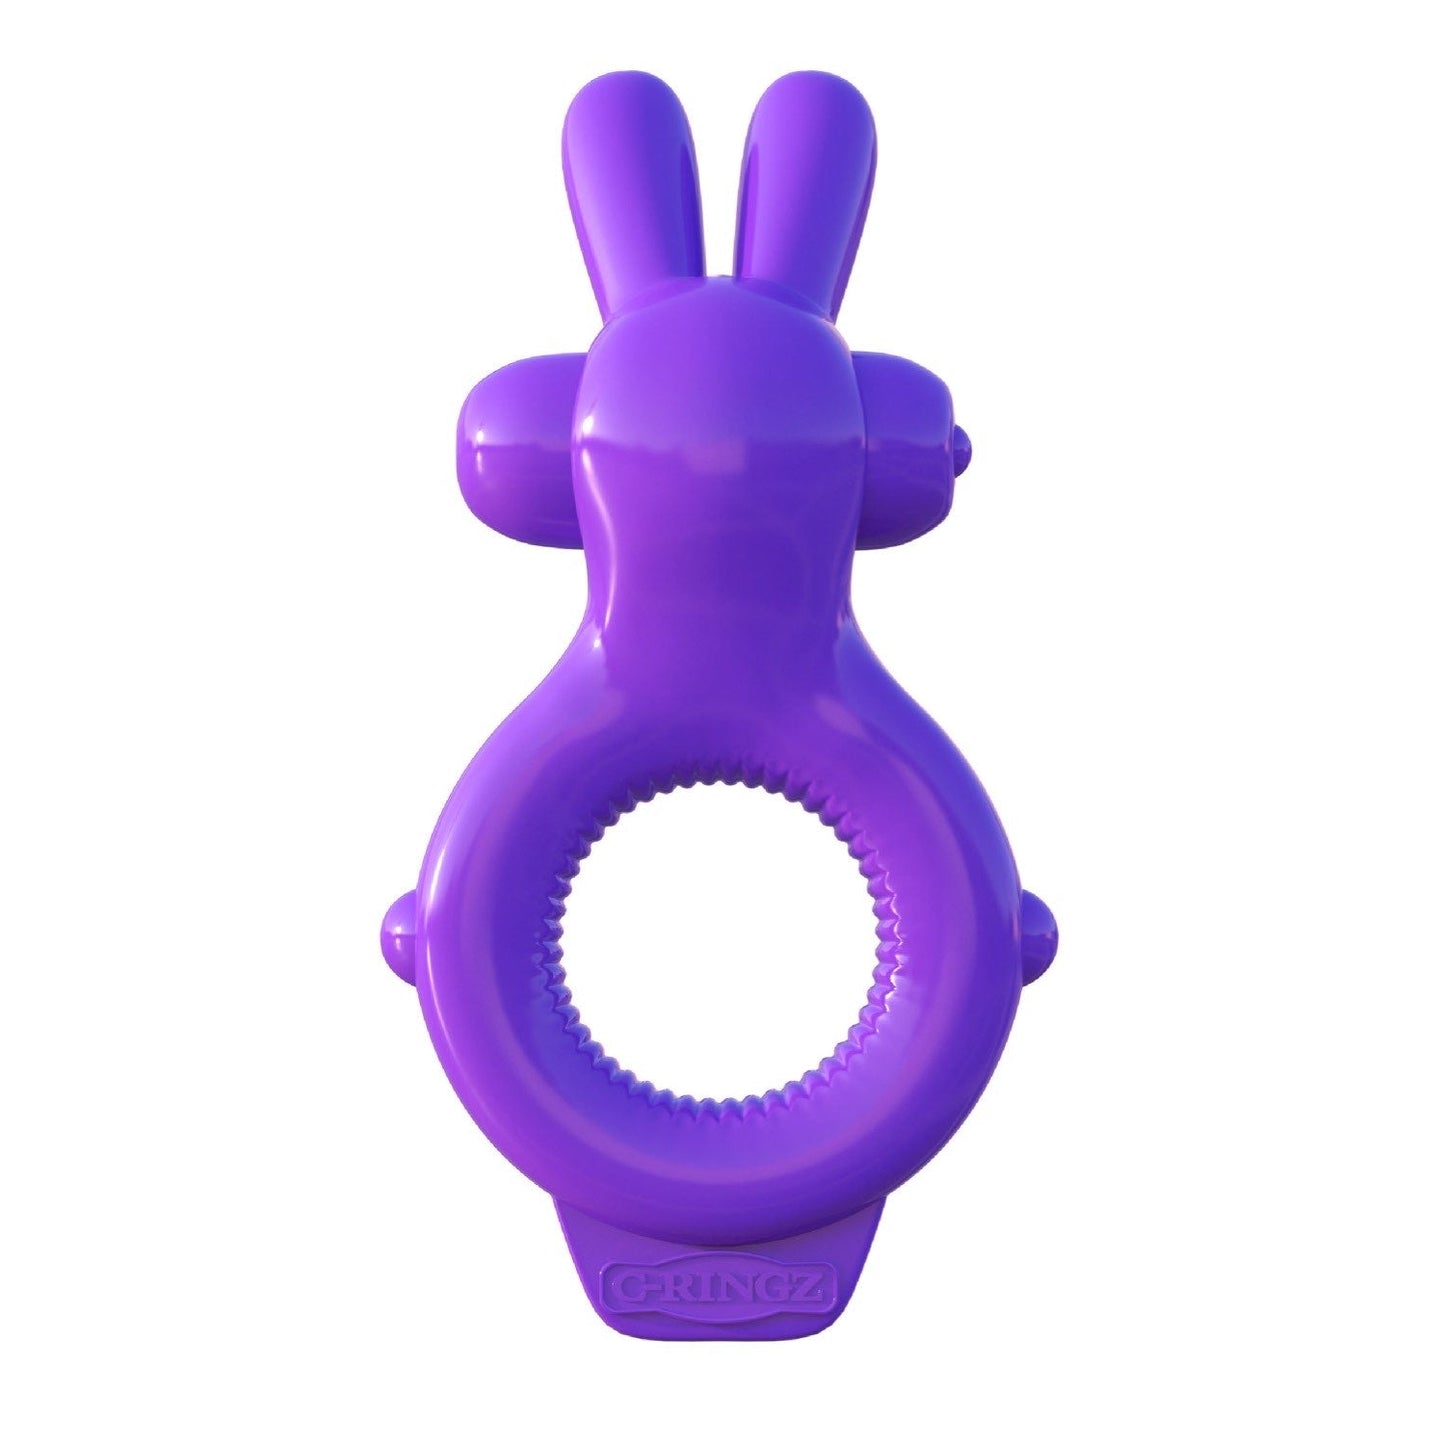 Ultimate Rabbit Ring - Purple Vibrating Cock Ring